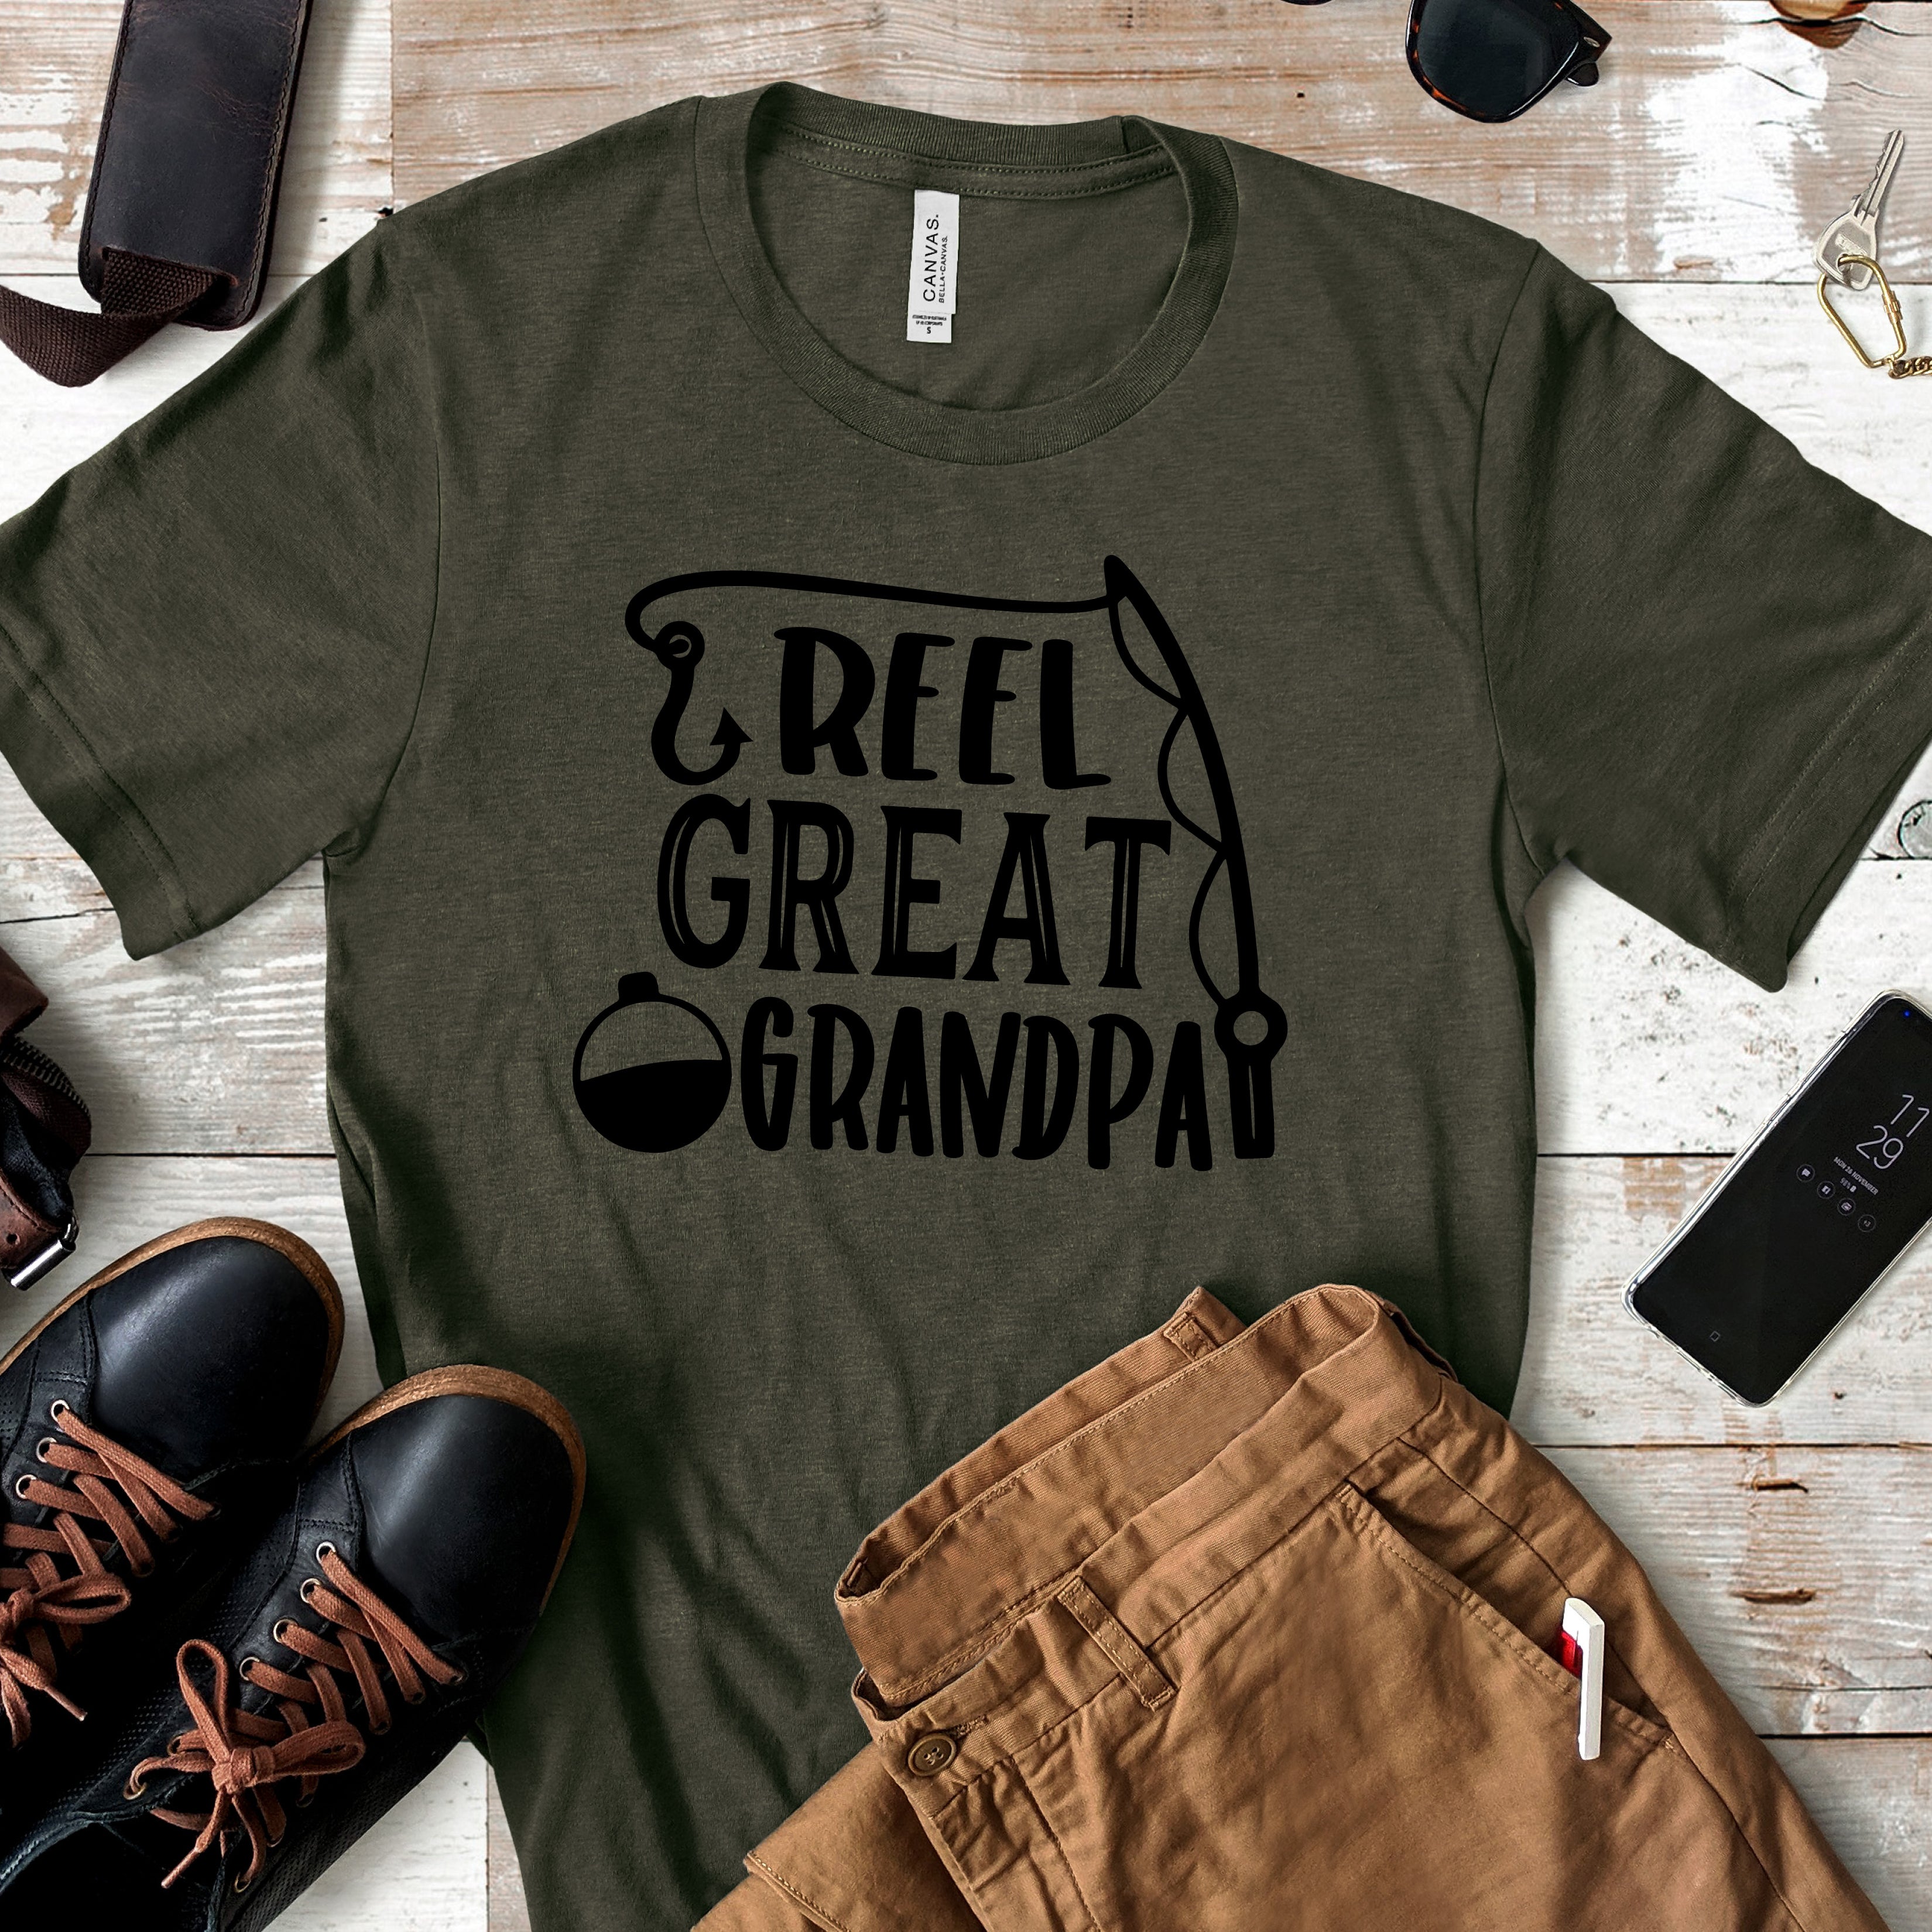 Reel Cool Dad Fishing T-Shirt, Funny Fishing Father Shirt, G - Inspire  Uplift